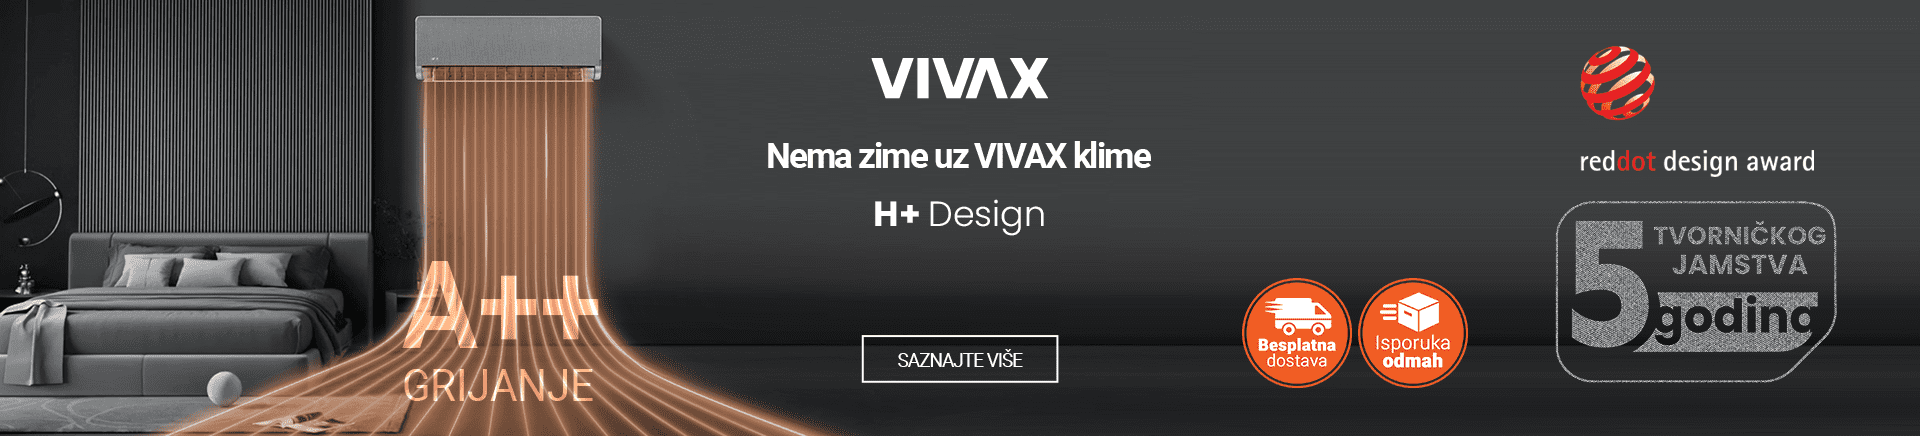 Nema zime uz Vivax klime H+ Design